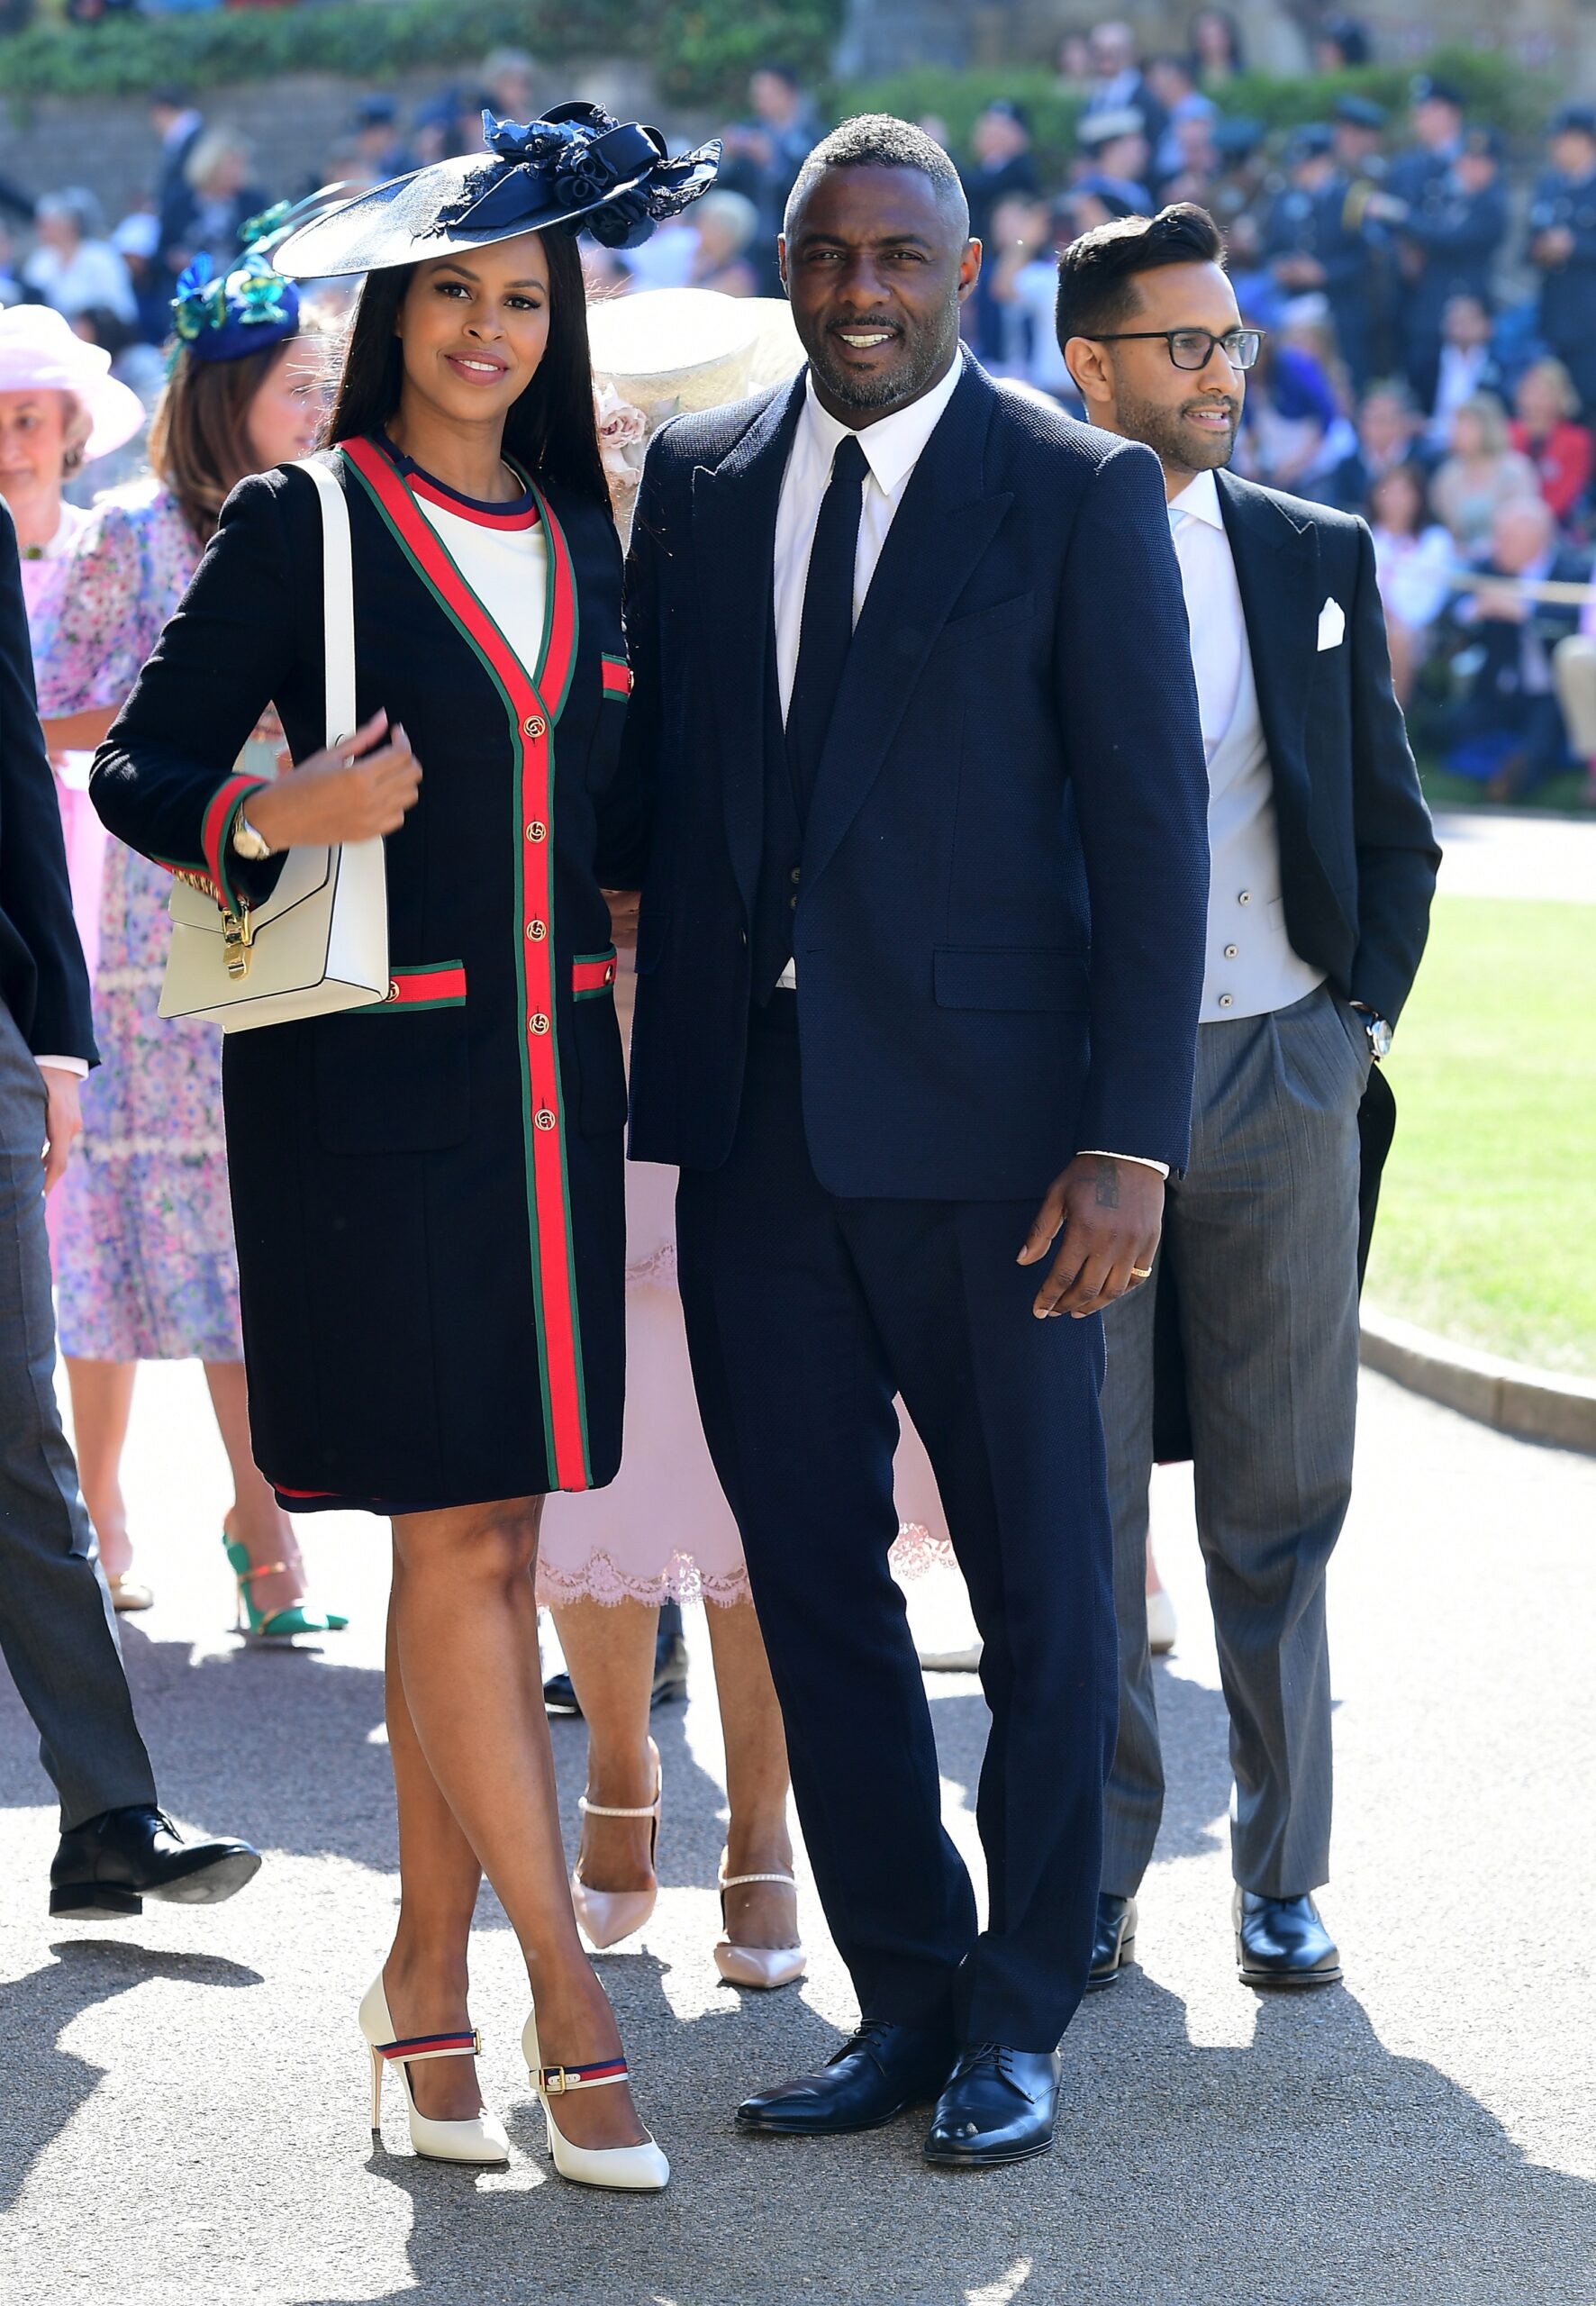 Idris looked smart in his suit